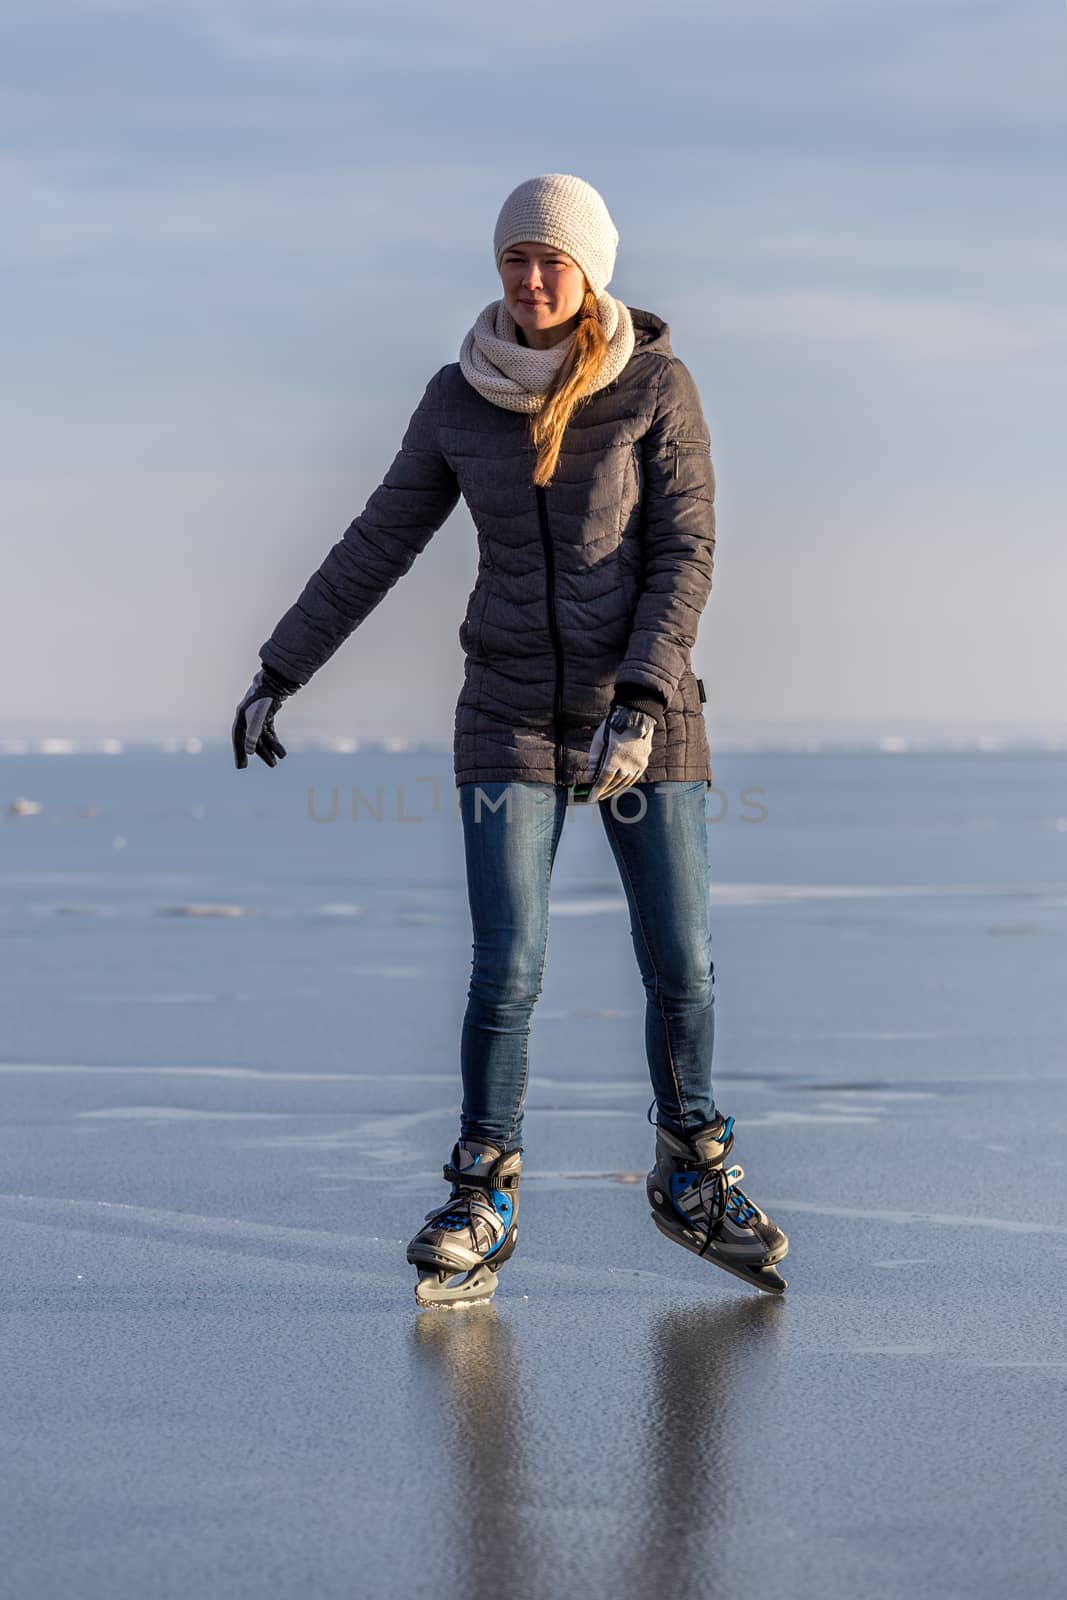 Young girl skating on Lake Balaton in Hungary by Digoarpi